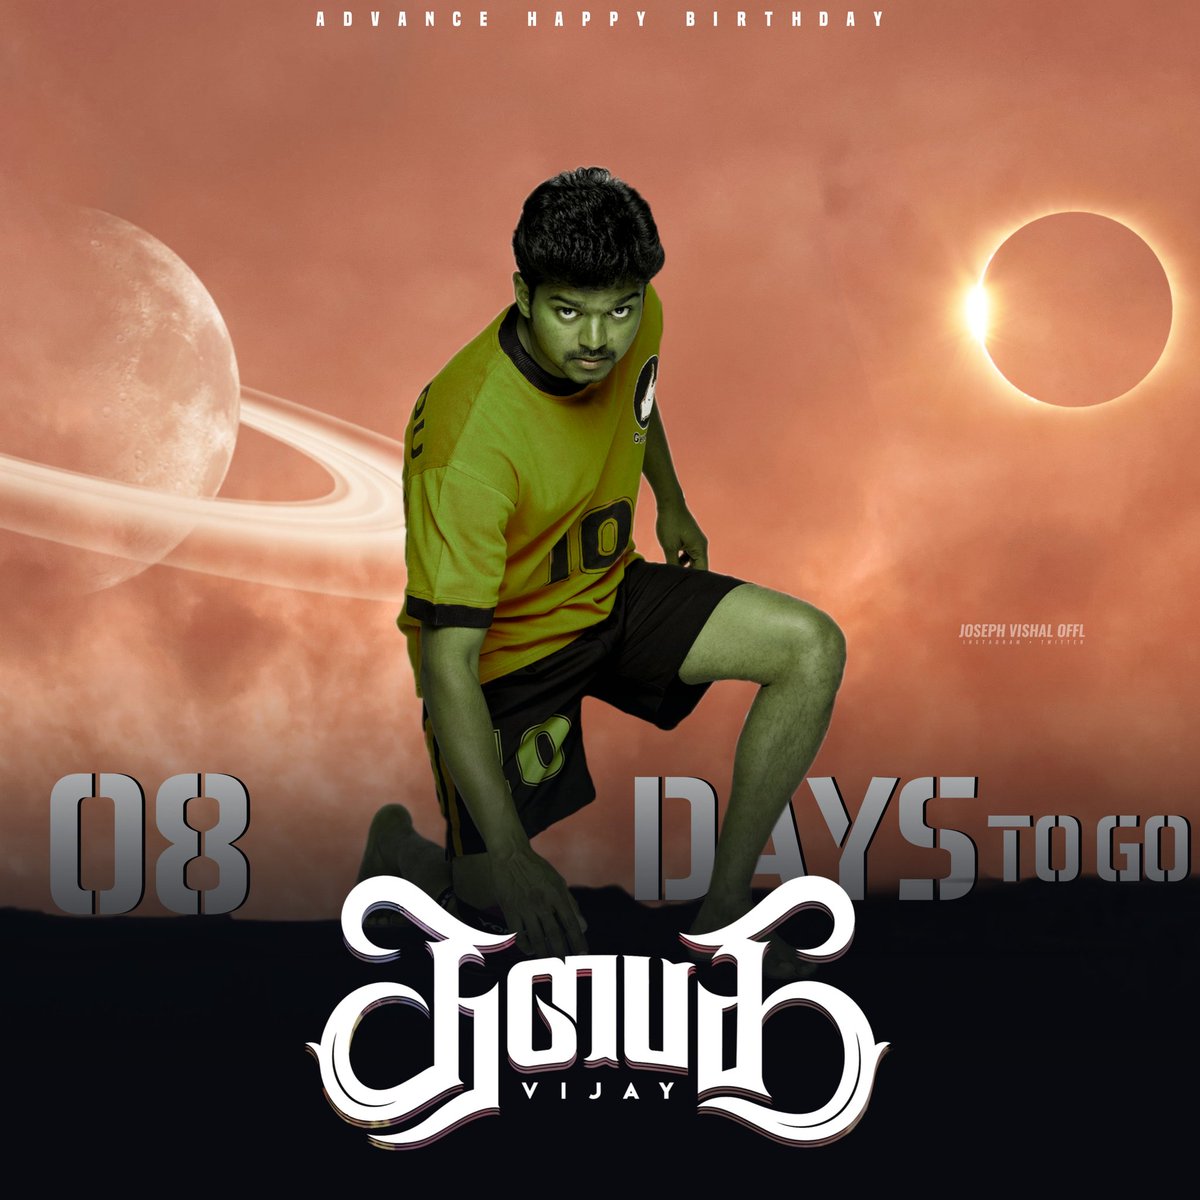 Countdown DP Design! 🤍✨
#08DaysToGo #Gilli

#Thalapathy66 || @ActorVijay